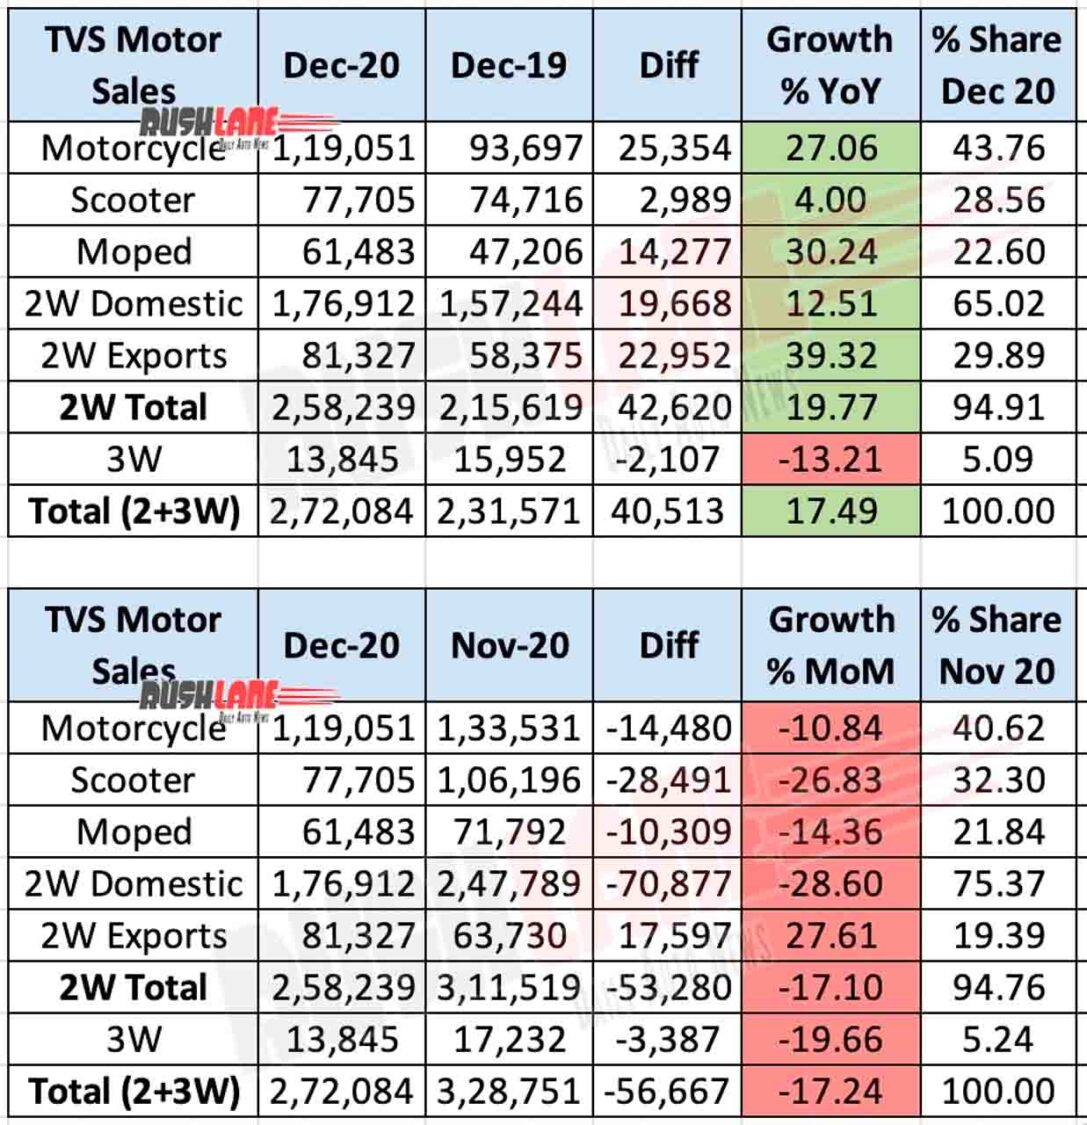 TVS Motor Sales Dec 2020 - YoY vs MoM